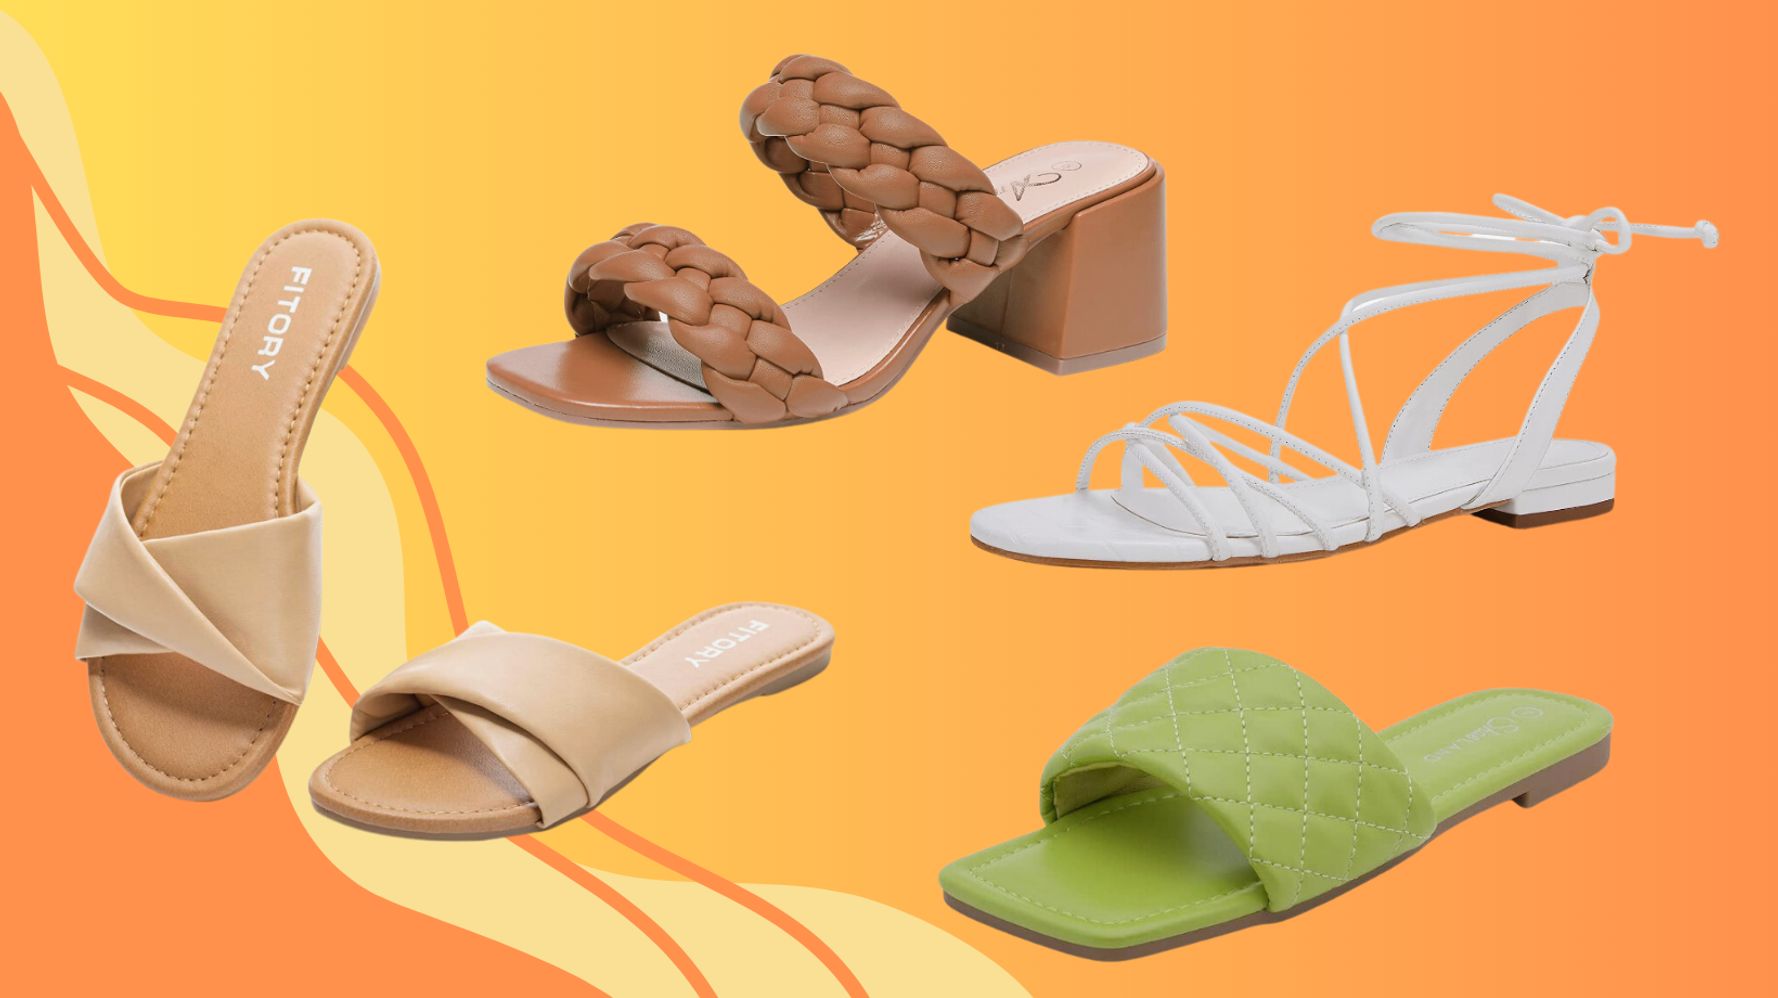 Brown Genuine Leather Sandals for Women, Ladies Womens Shoes, Summer  Sandals, Flip-Flops, Flats, Slides, Thongs, Comfort Walking, CRISSCROSS